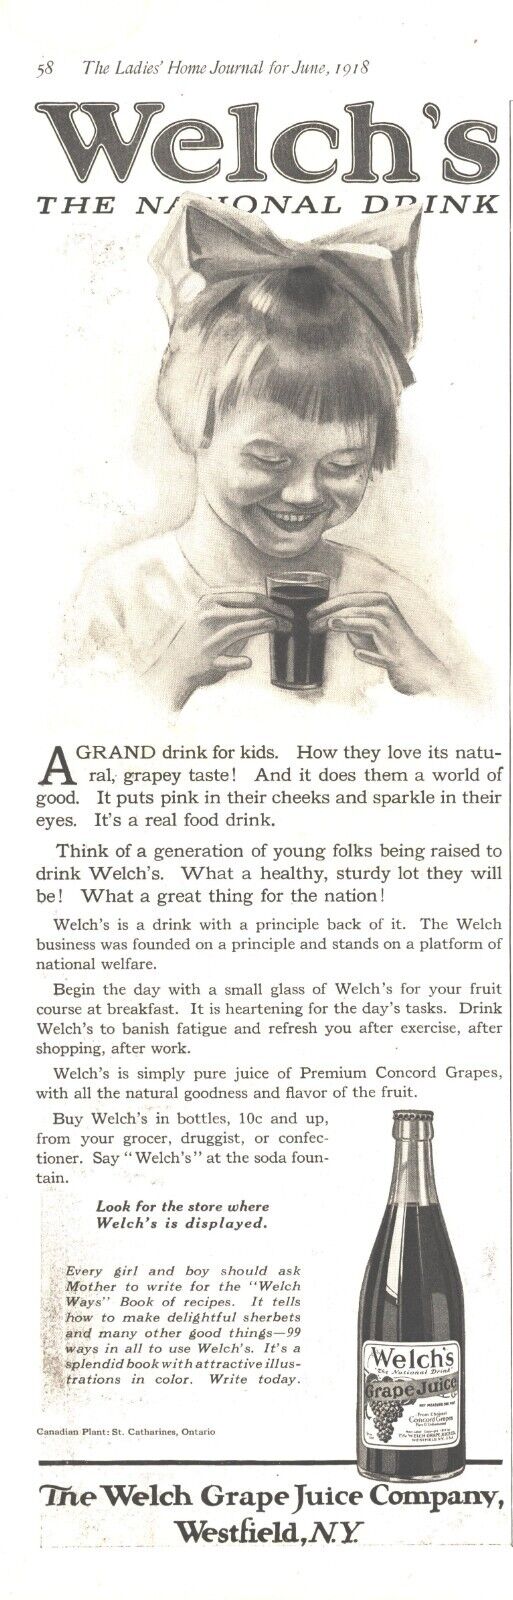 1918 Welchs Grape Juice Antique Print Ad World War I Era Girl Hair Bow Concord